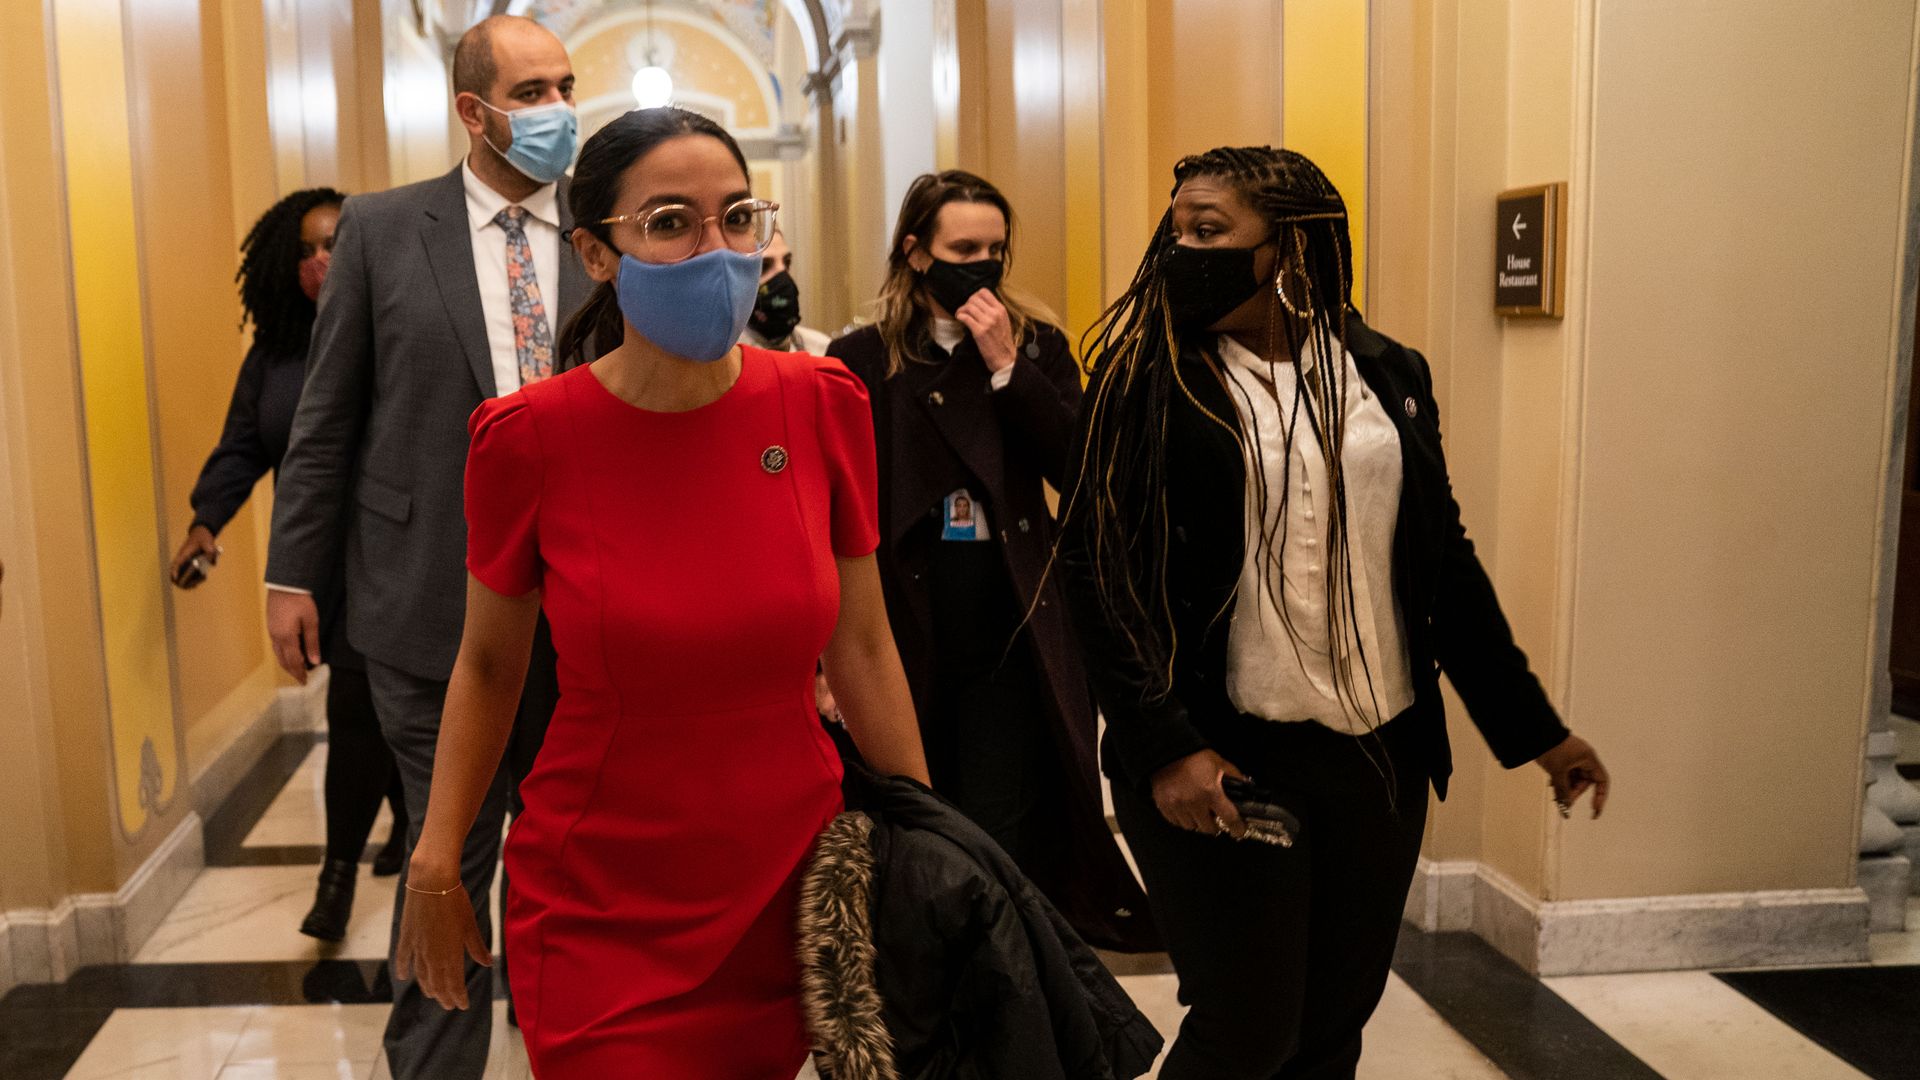 Reps. Alexandria Ocasio-Cortez and Cori Bush are seen walking through the Capitol last month.